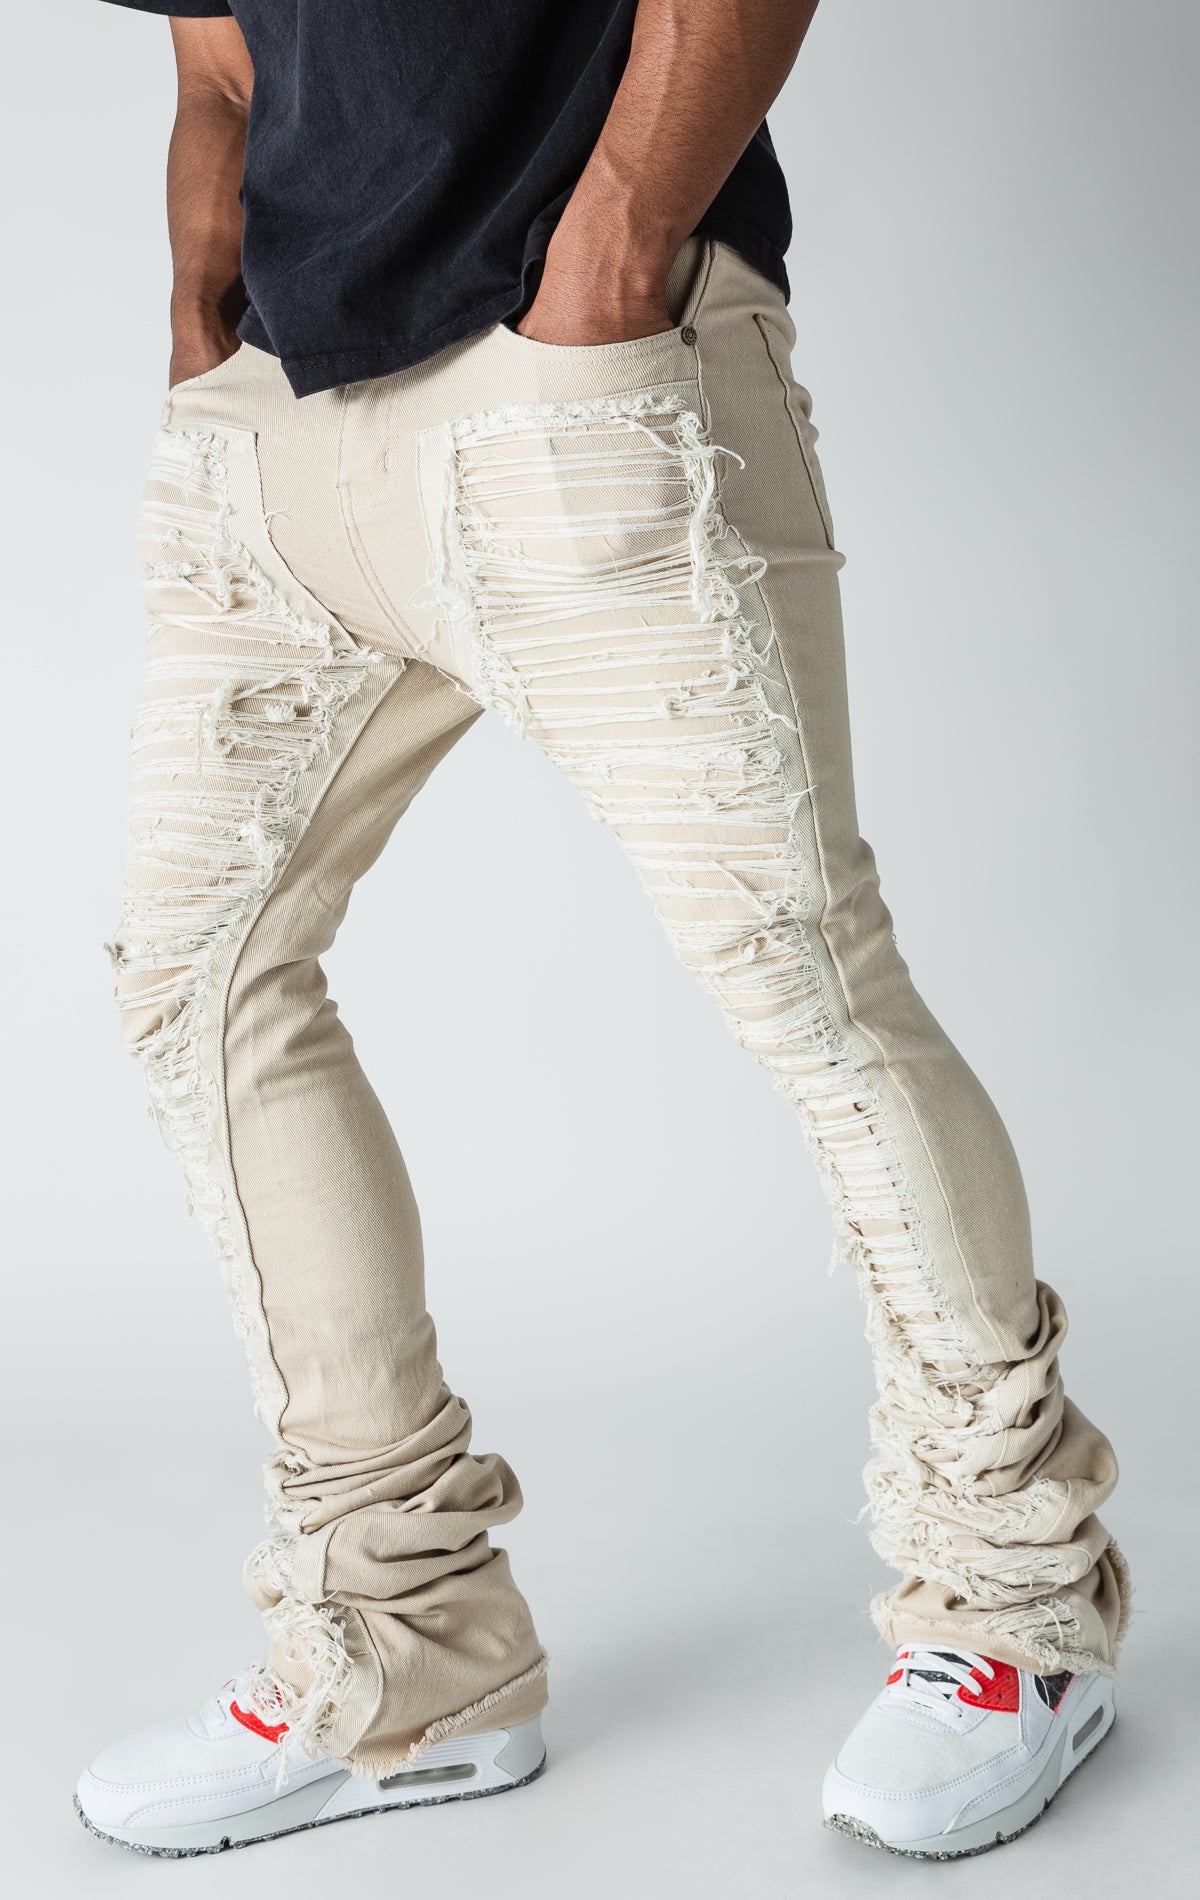 Khaki patterned stitched, flared denim jeans.